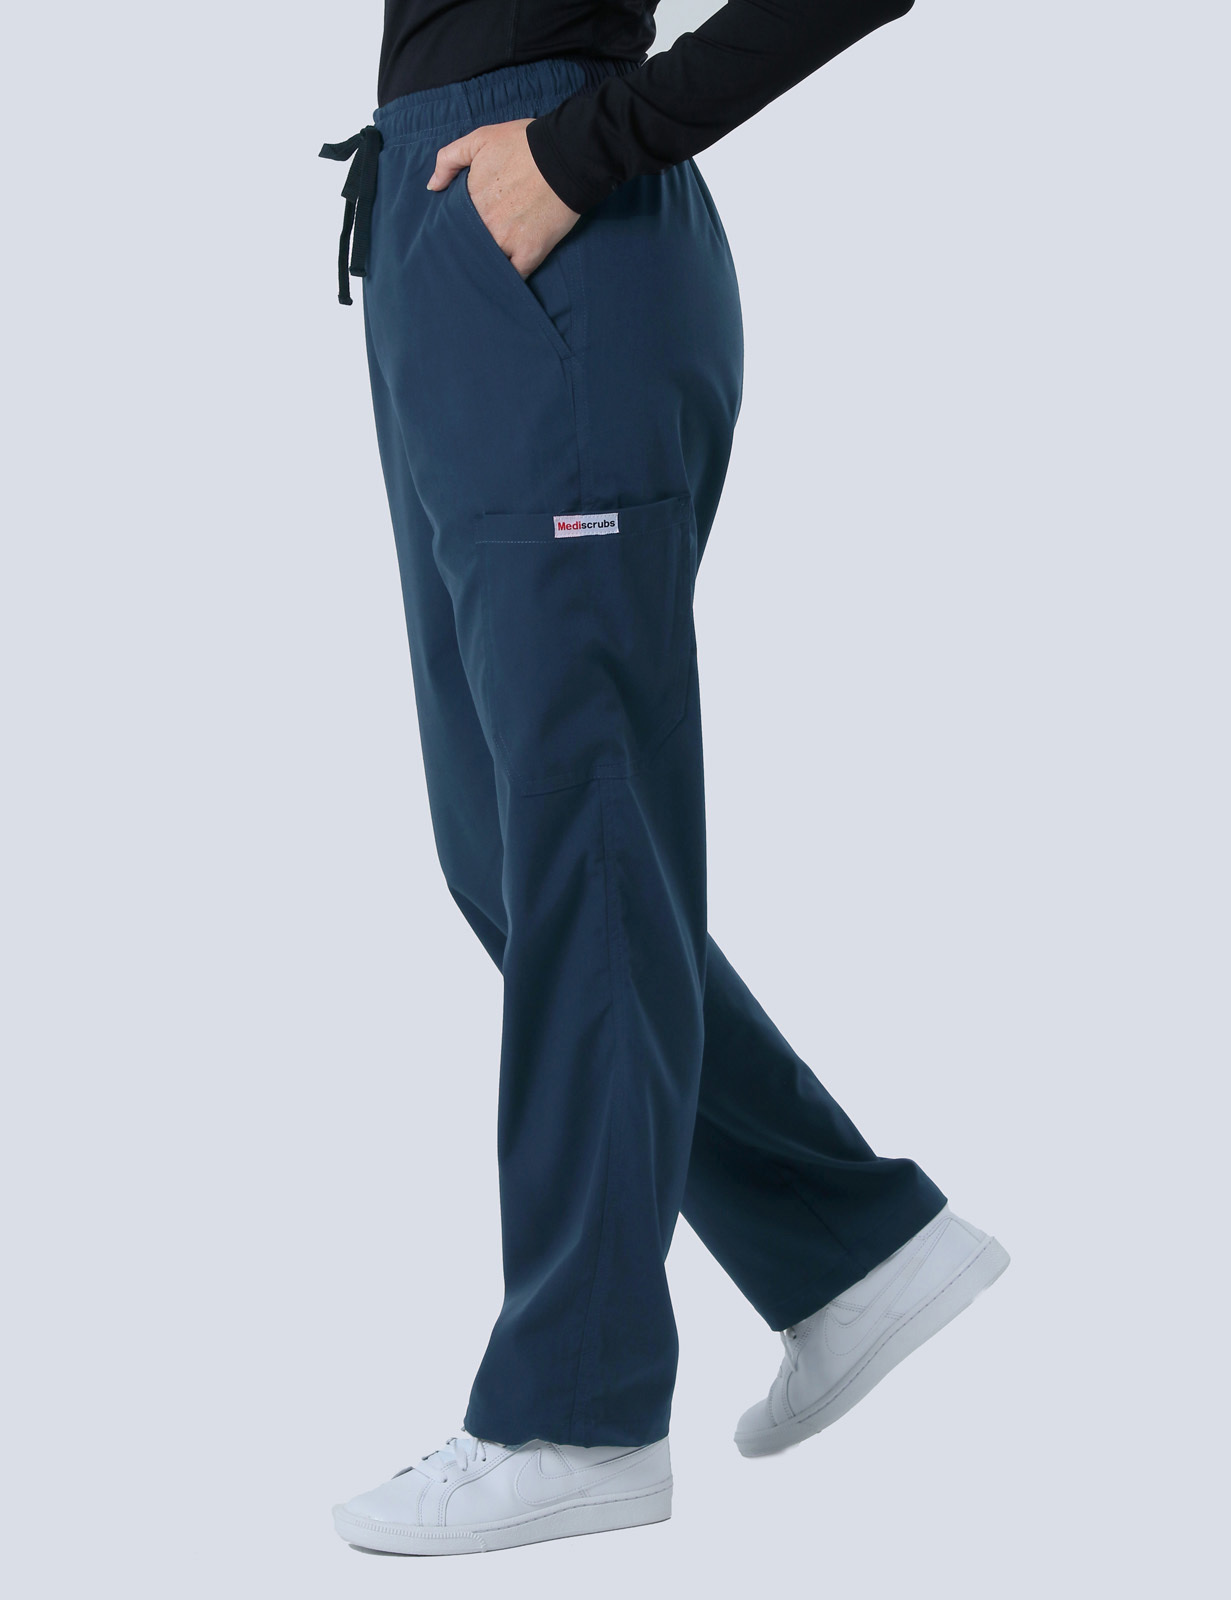 Peninsula Health Frankston - ICU Nurse (Women's Fit Solid Scrub Top and Cargo Pants in Navy incl Logos)